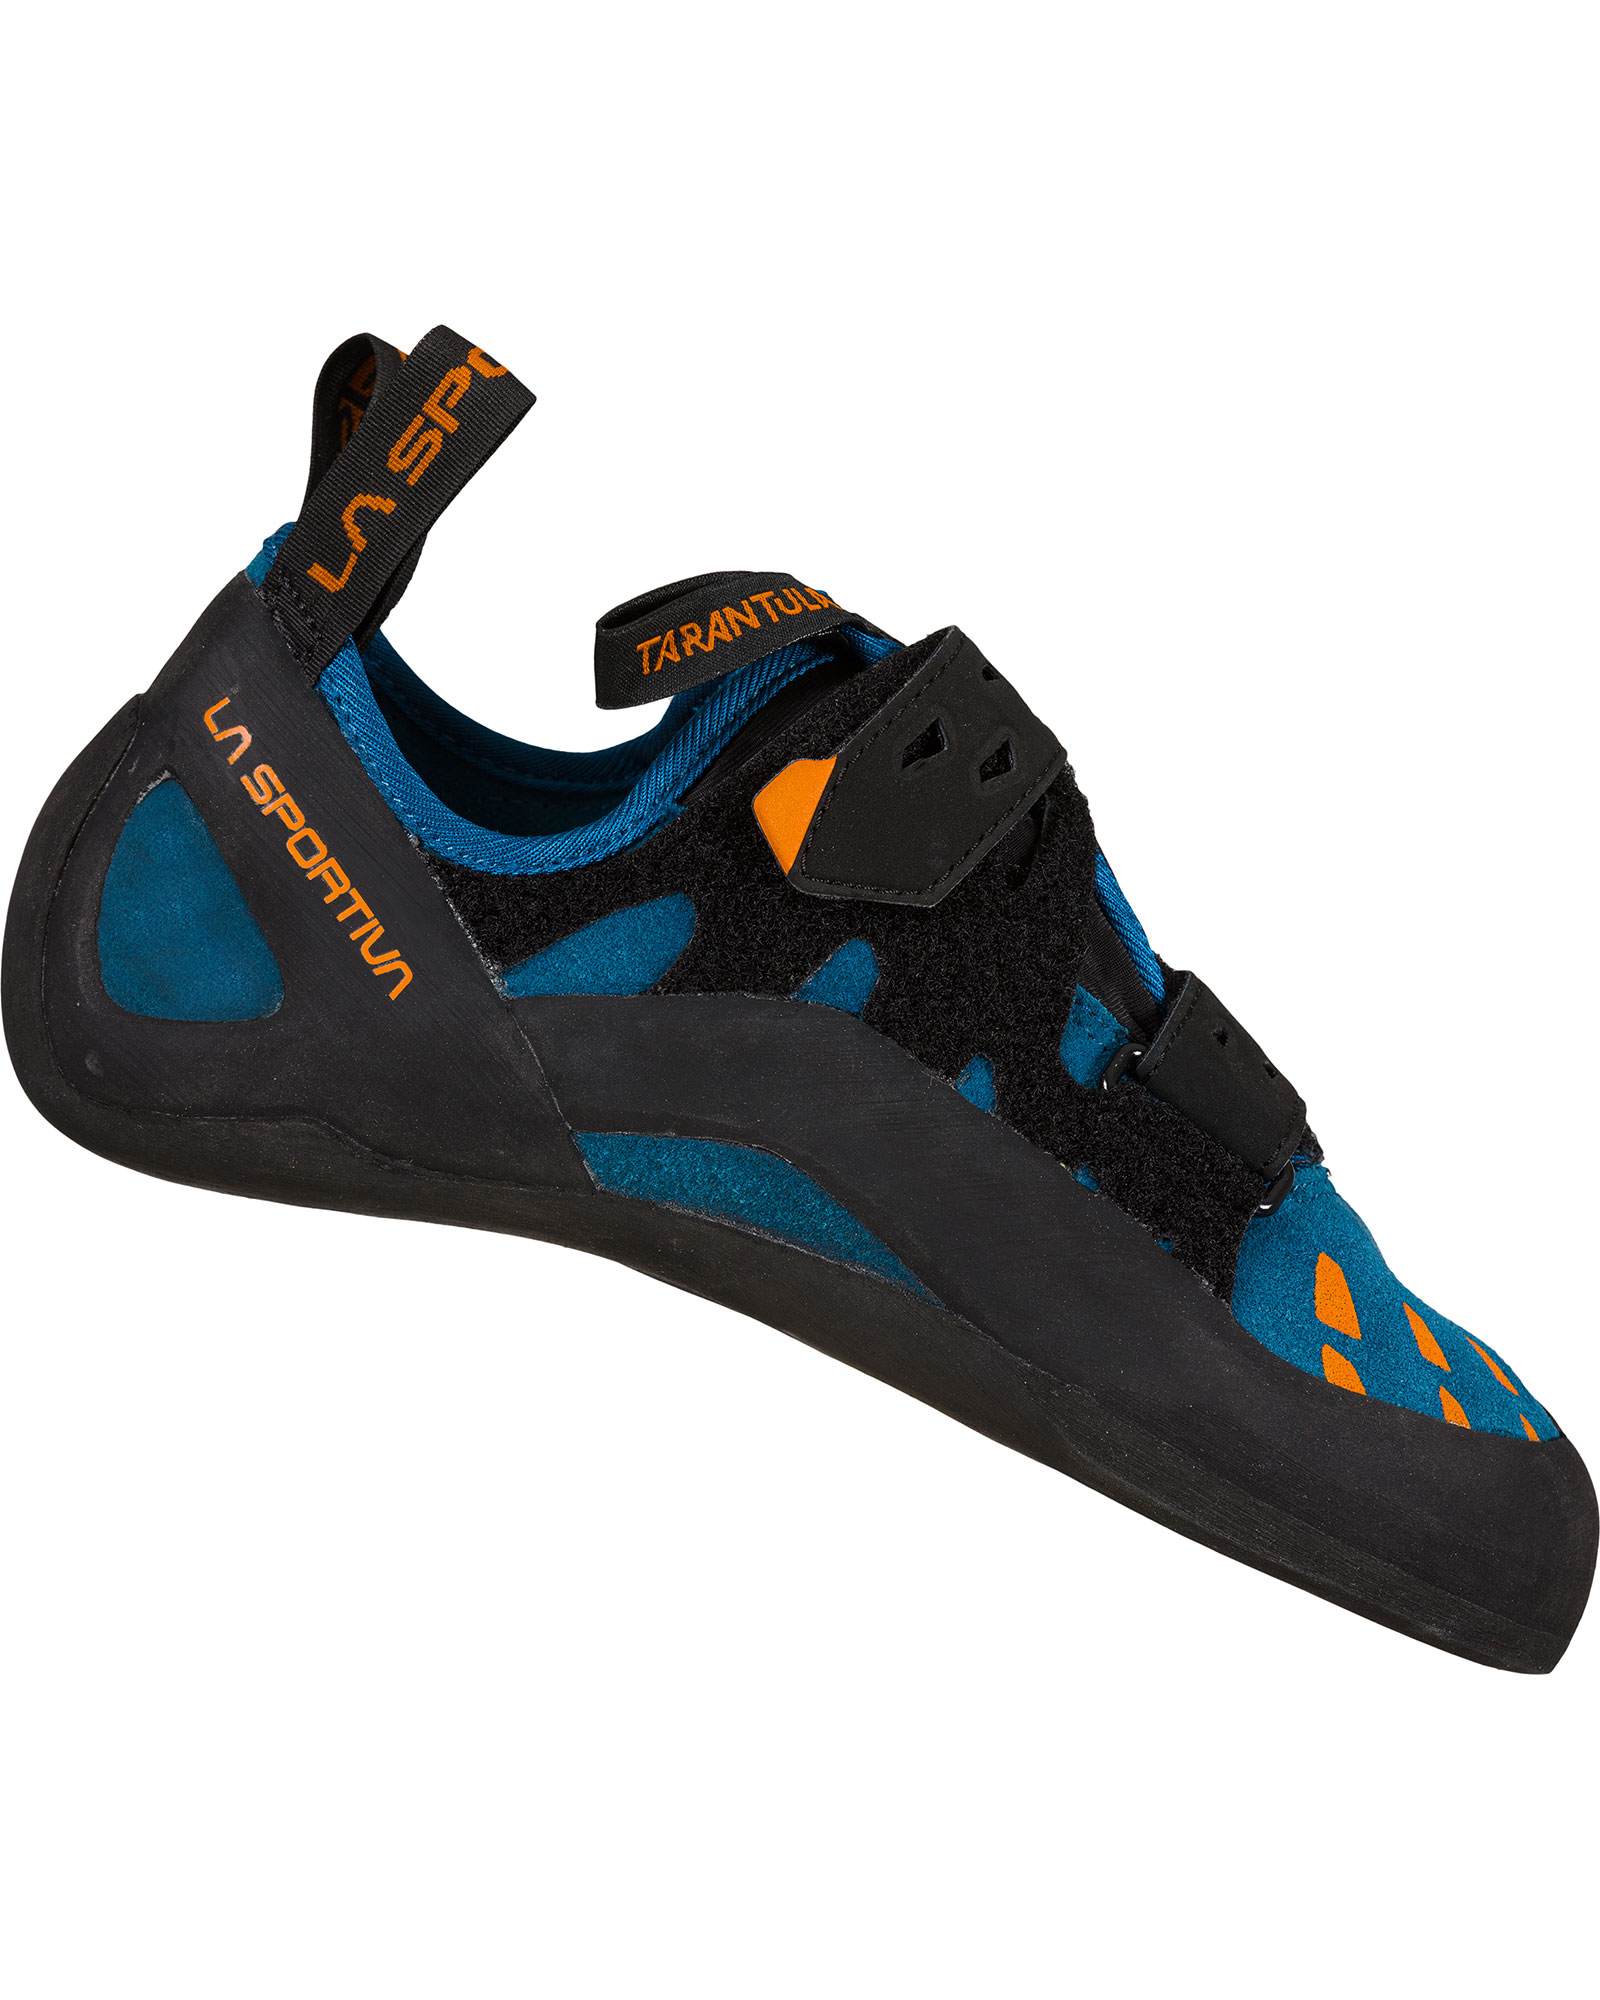 La Sportiva Tarantula Men’s Shoes - Space Blue/Maple EU 40